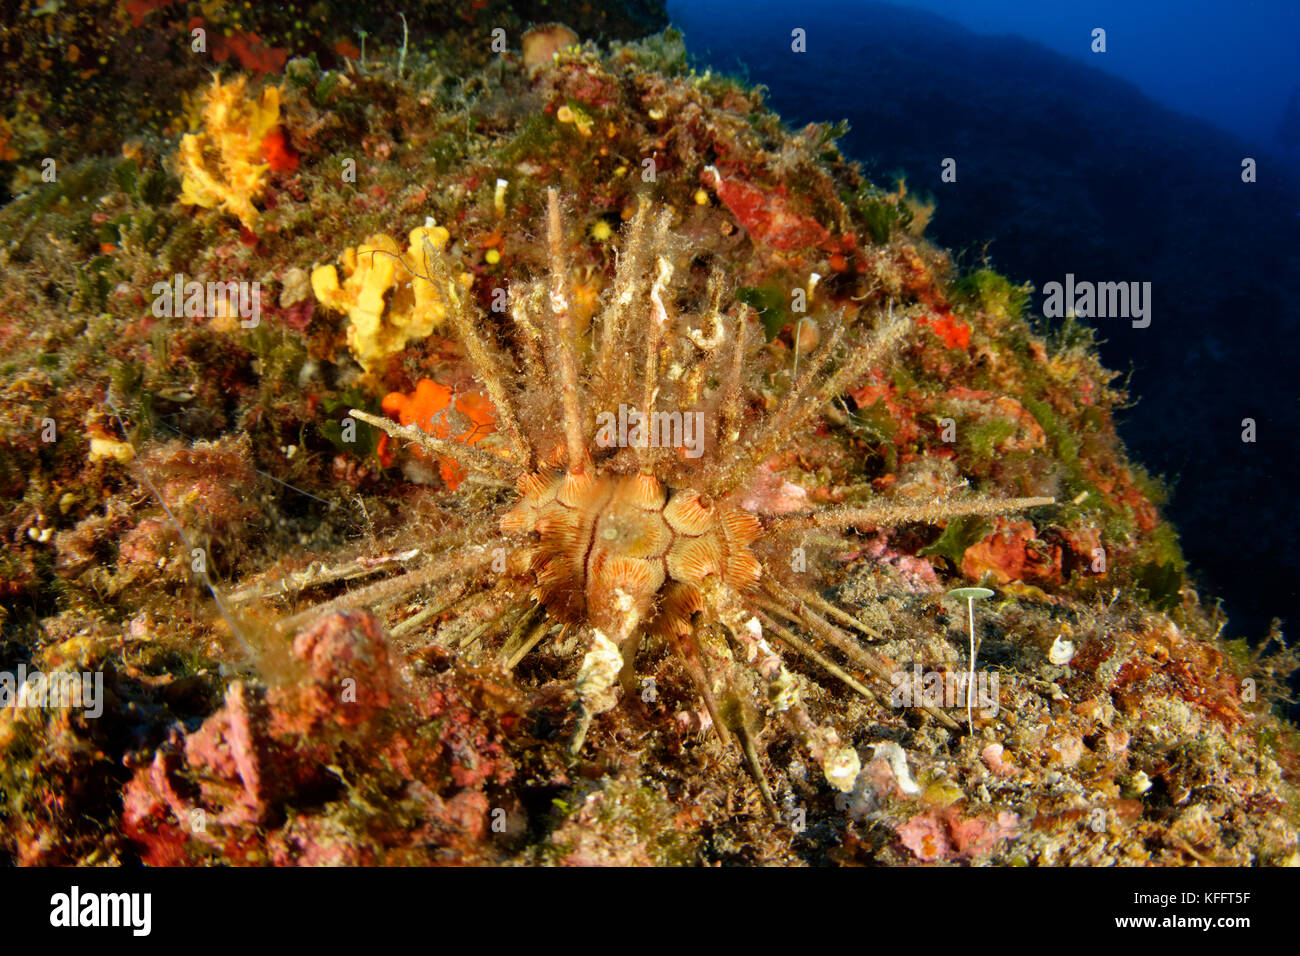 Red lance sea urchin, Stylocidaris affinis, Adriatic Sea, Mediterranean Sea, Sestrice, Dalmatia, Croatia Stock Photo